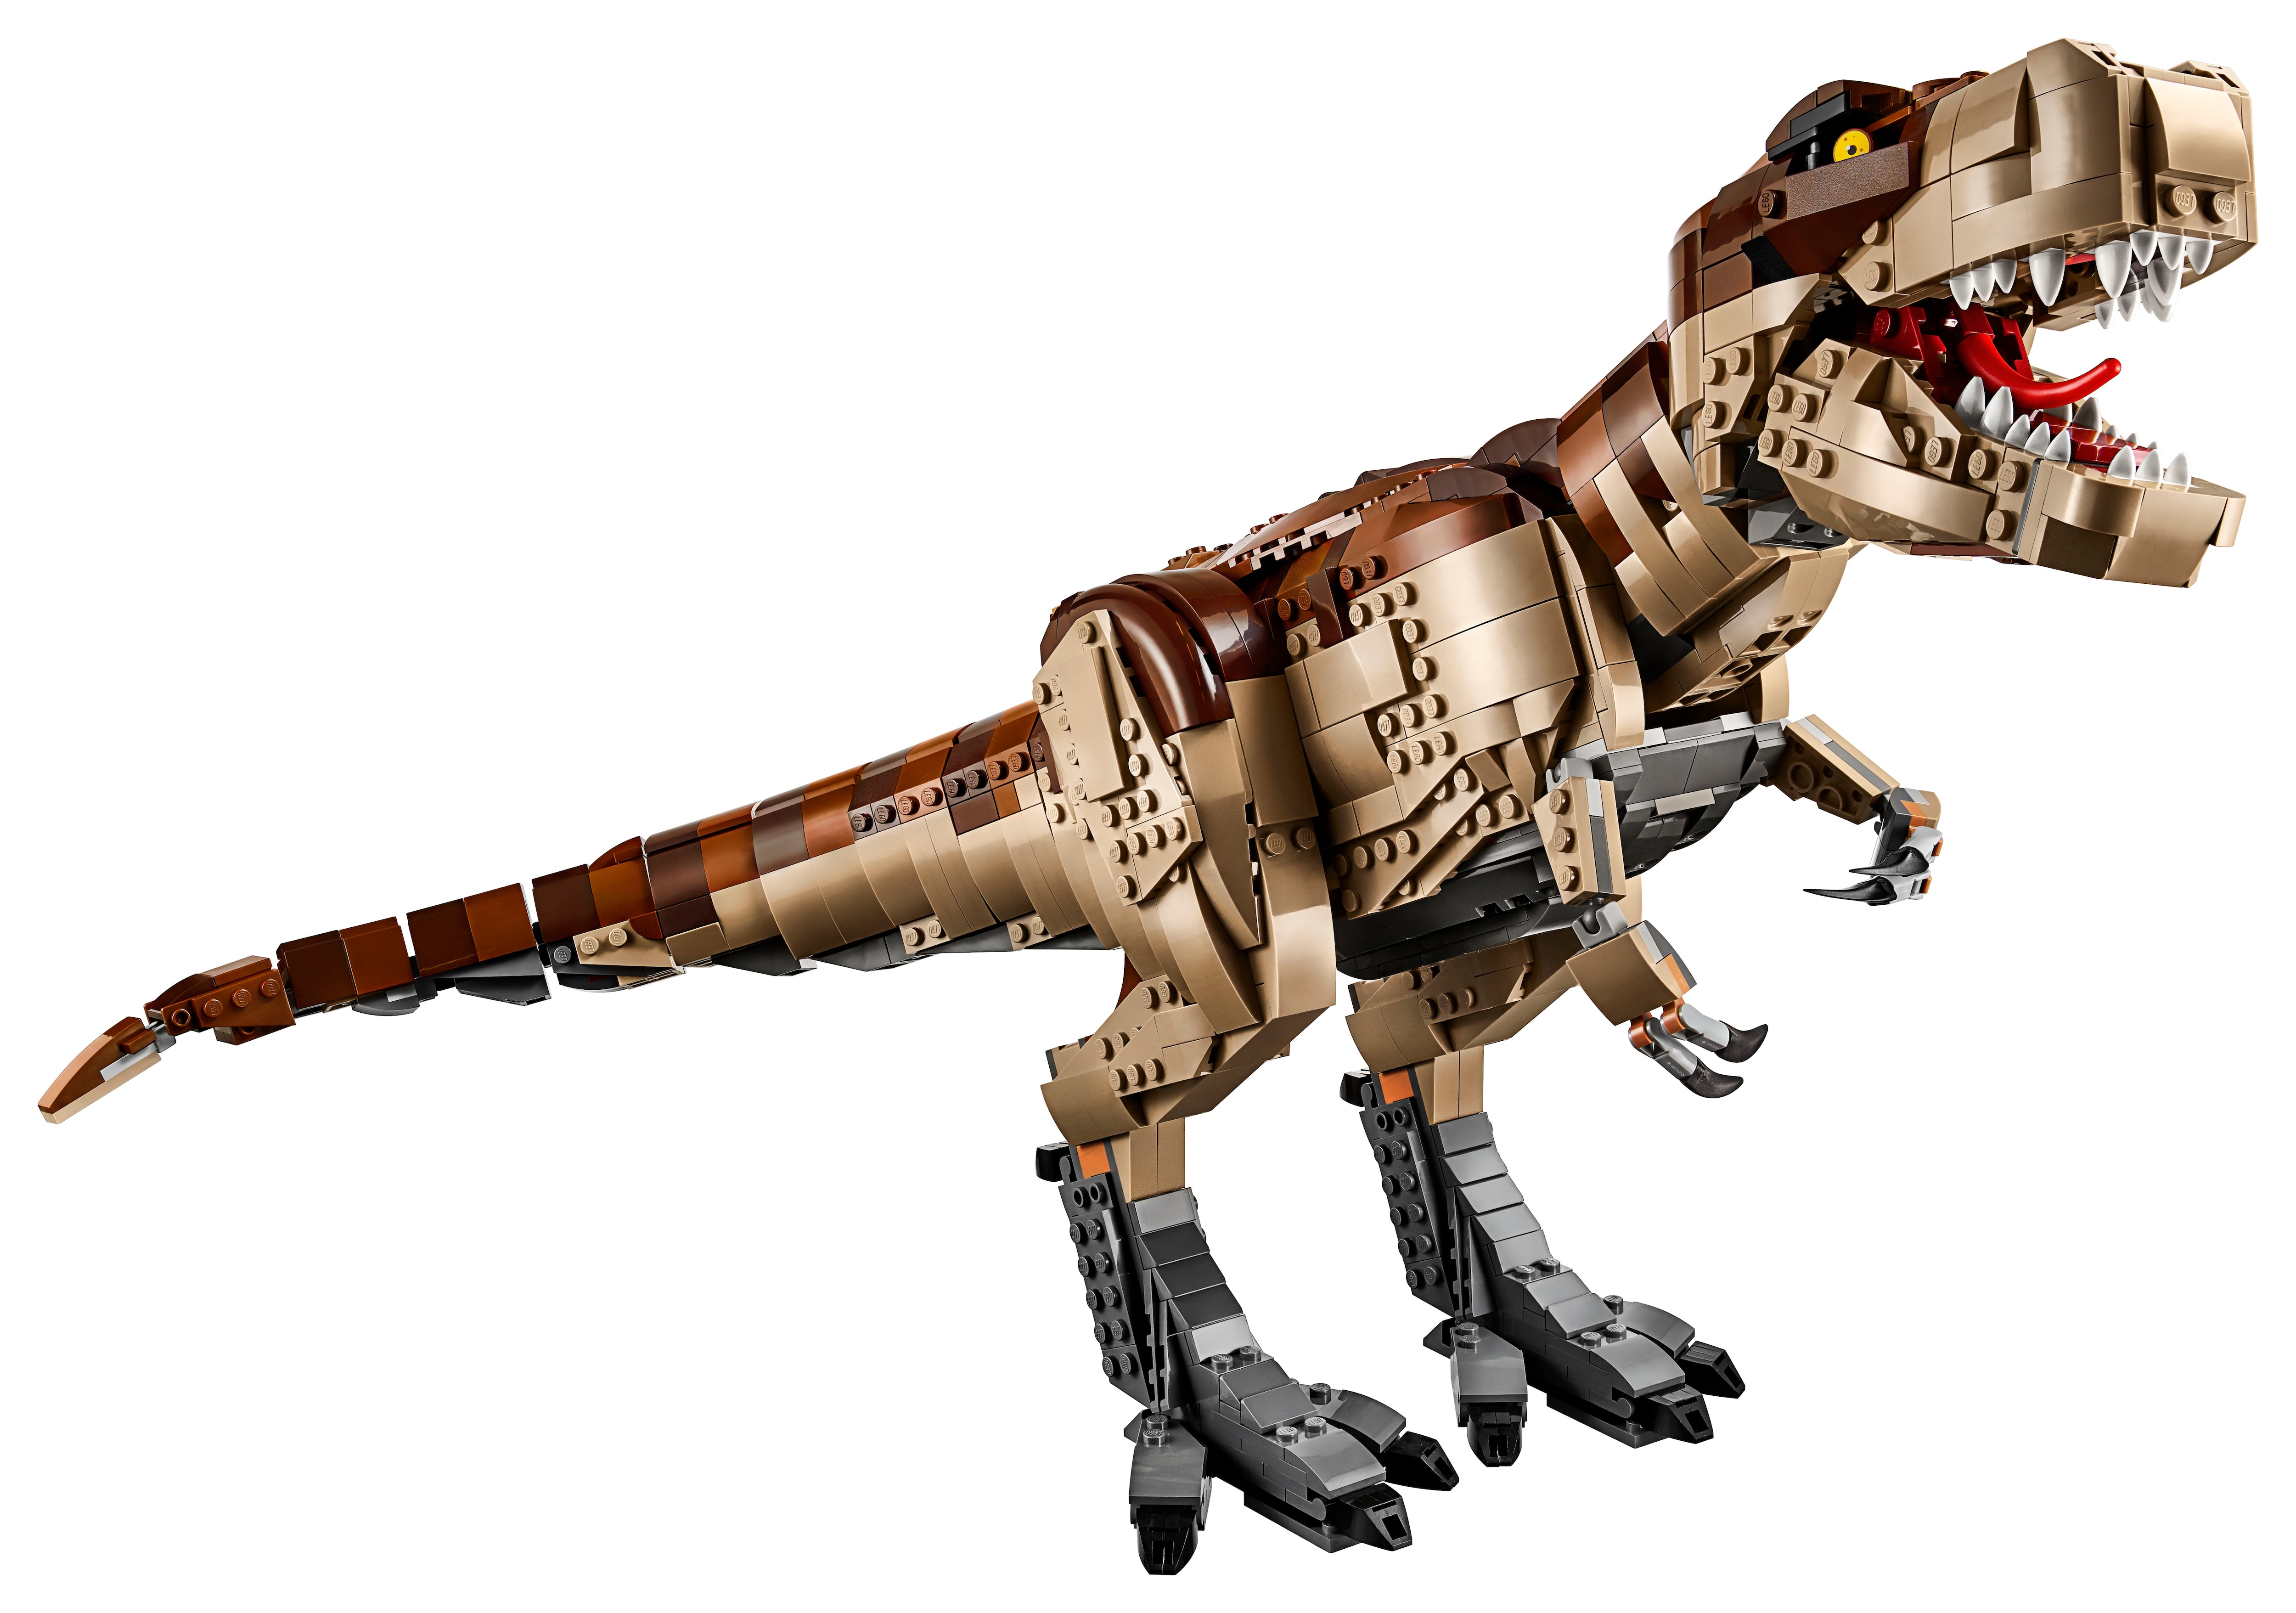 Lego Jurassic Park T-Rex